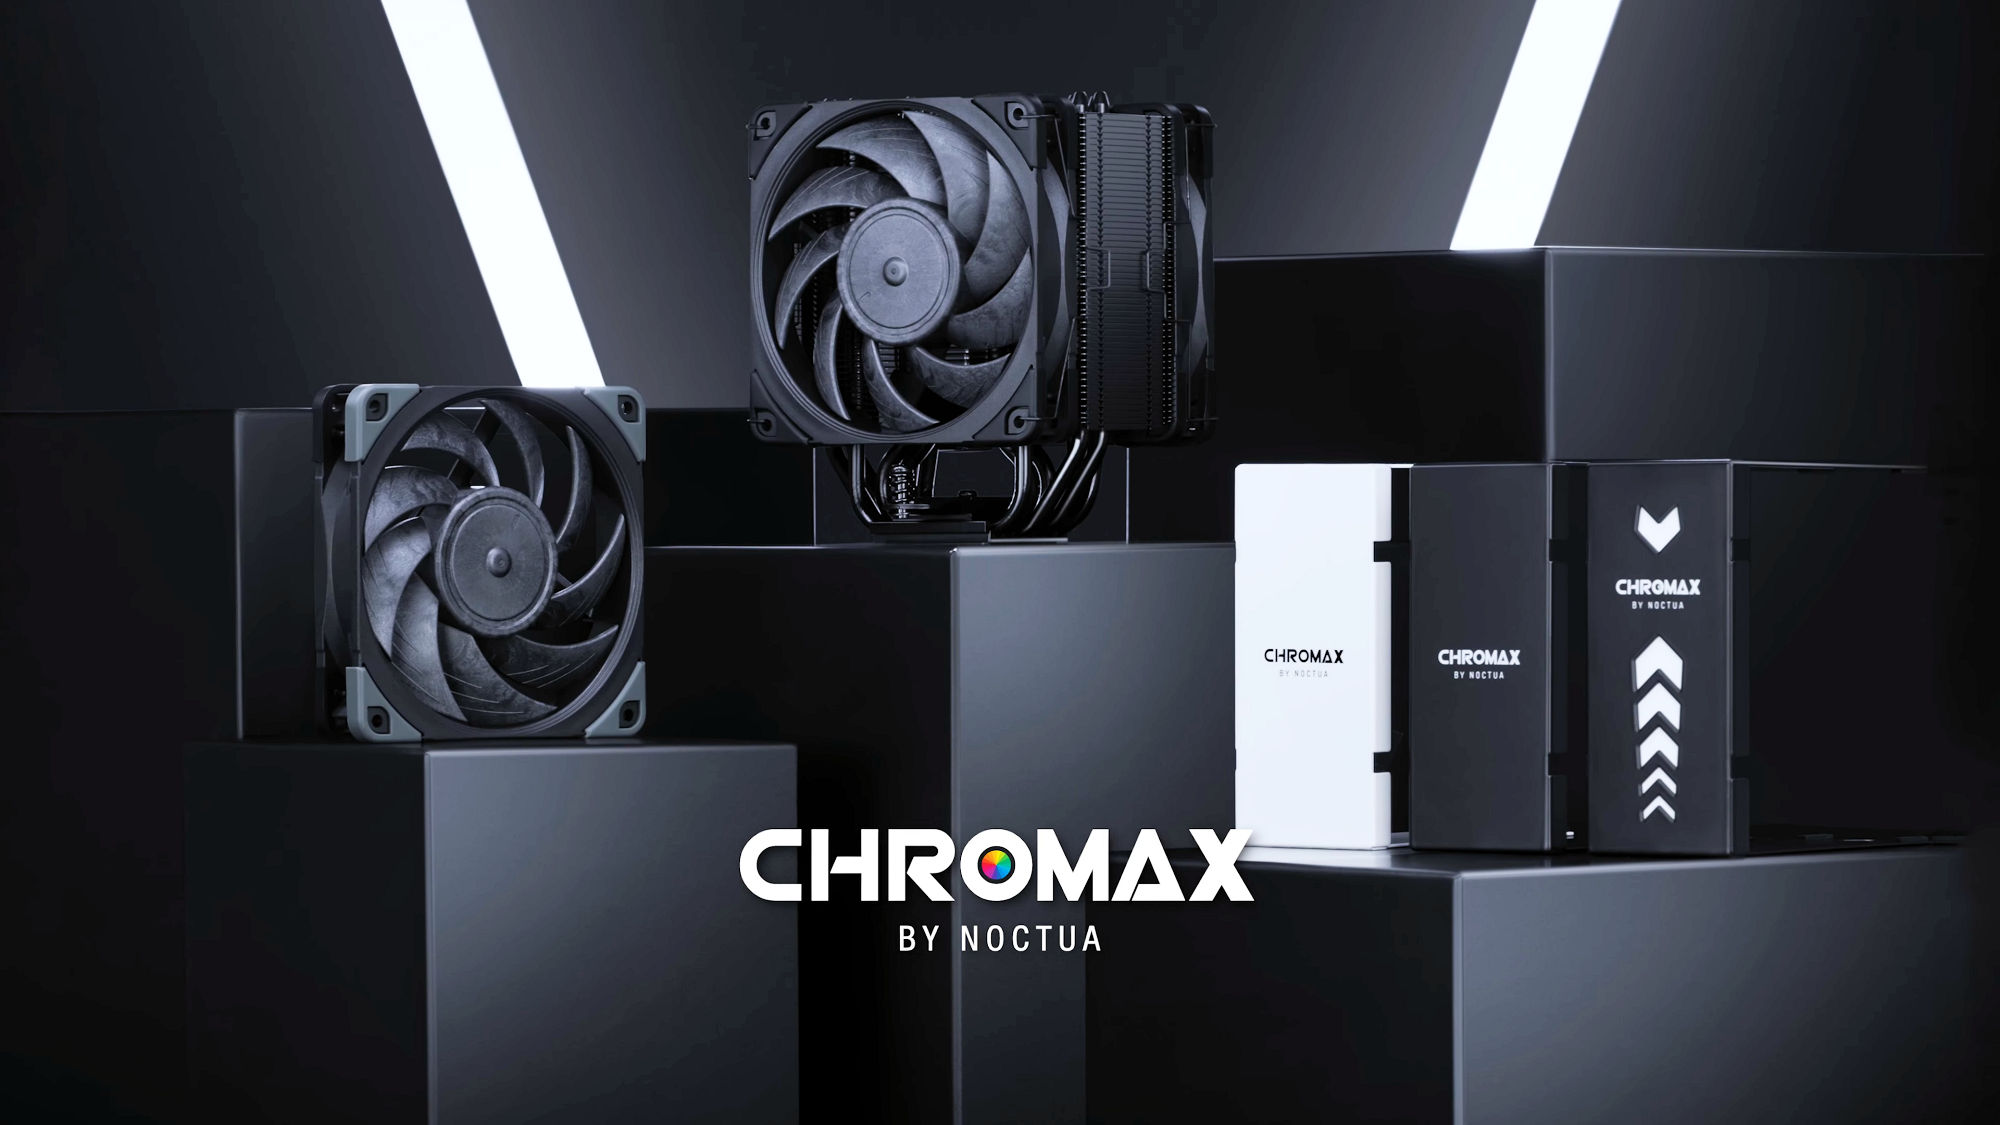 Noctua Announces Black Chromax Nf A12x25 Fans And Nh U12a Cooler With Lga1700 Socket Support Videocardz Com